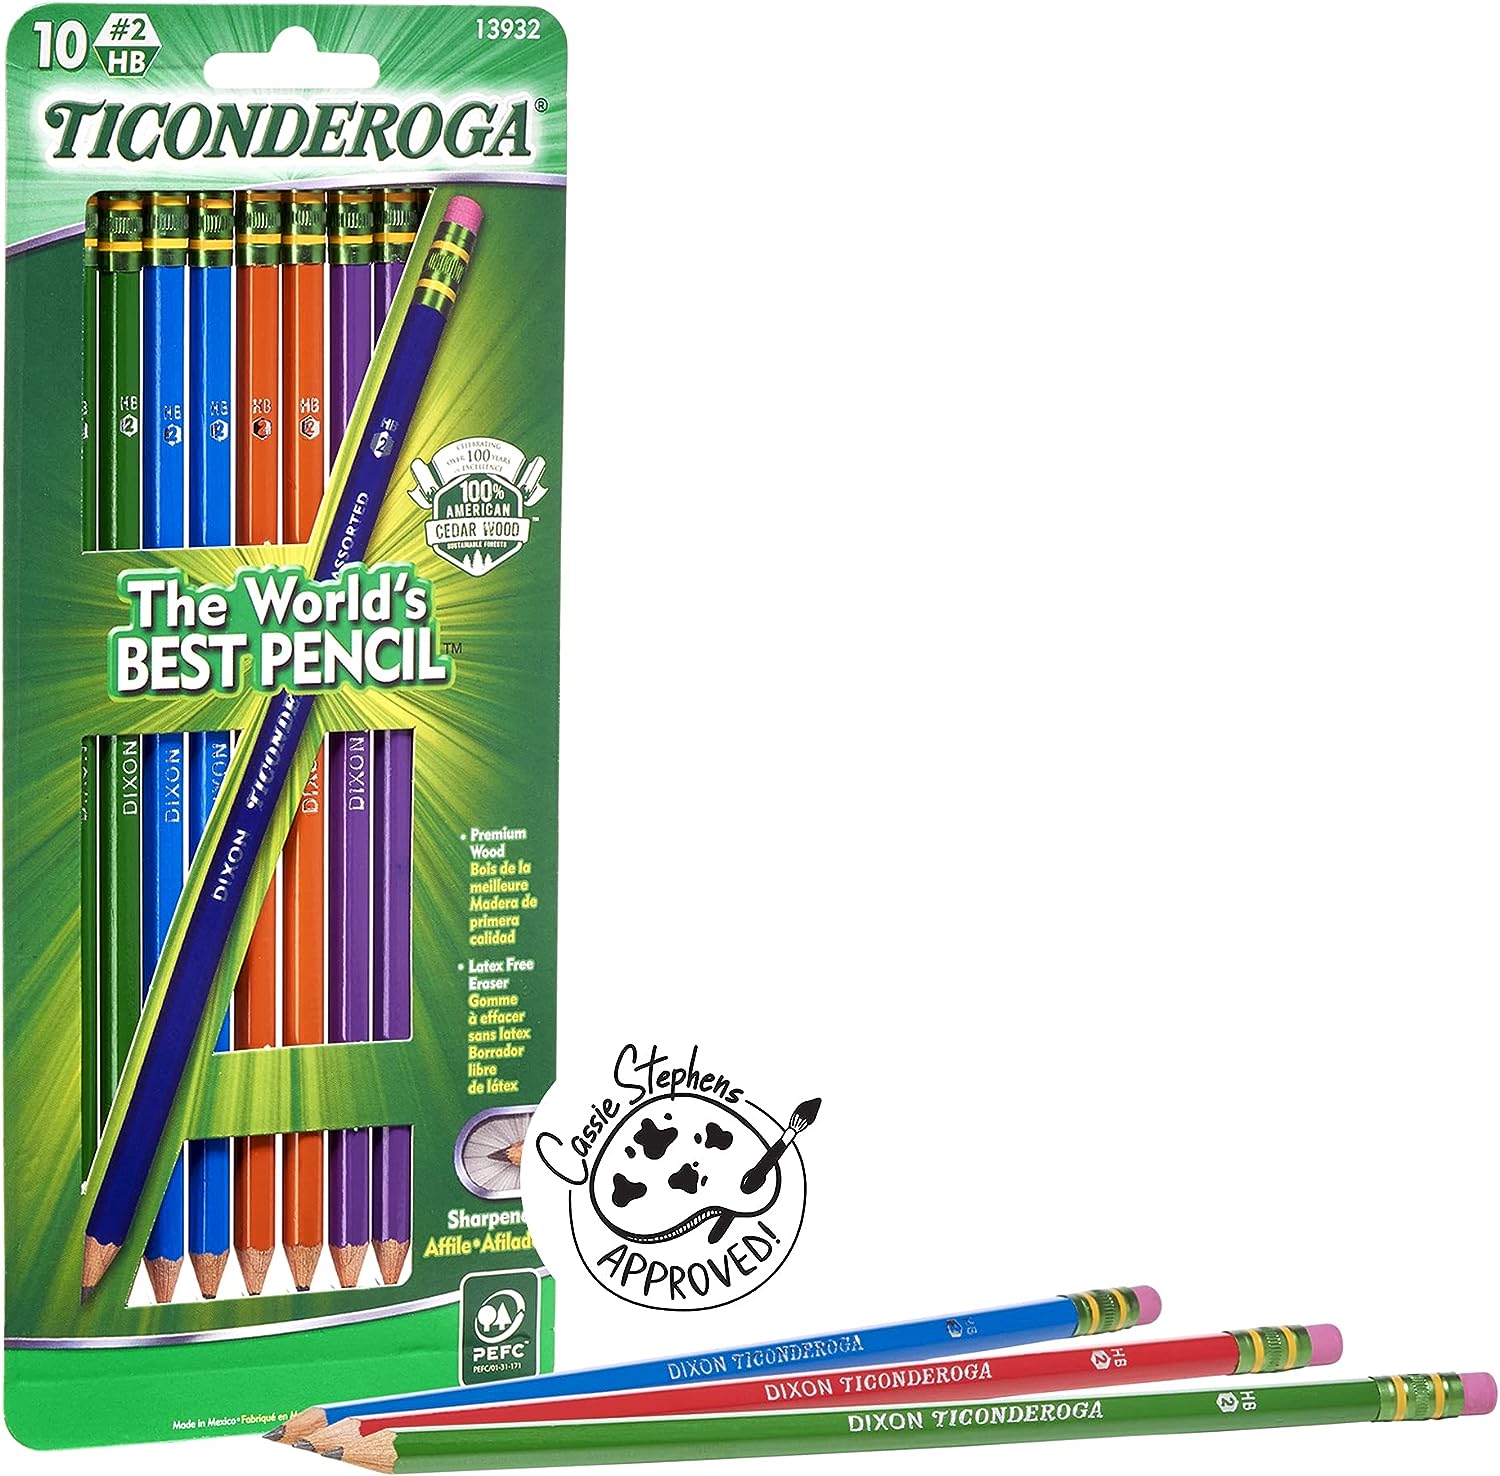 TICONDEROGA Pencils, Wood-Cased Graphite, #2 HB Soft, Pre-Sharpened, Assorted Color Barrels, Black Lead, 10-Pack (13932)